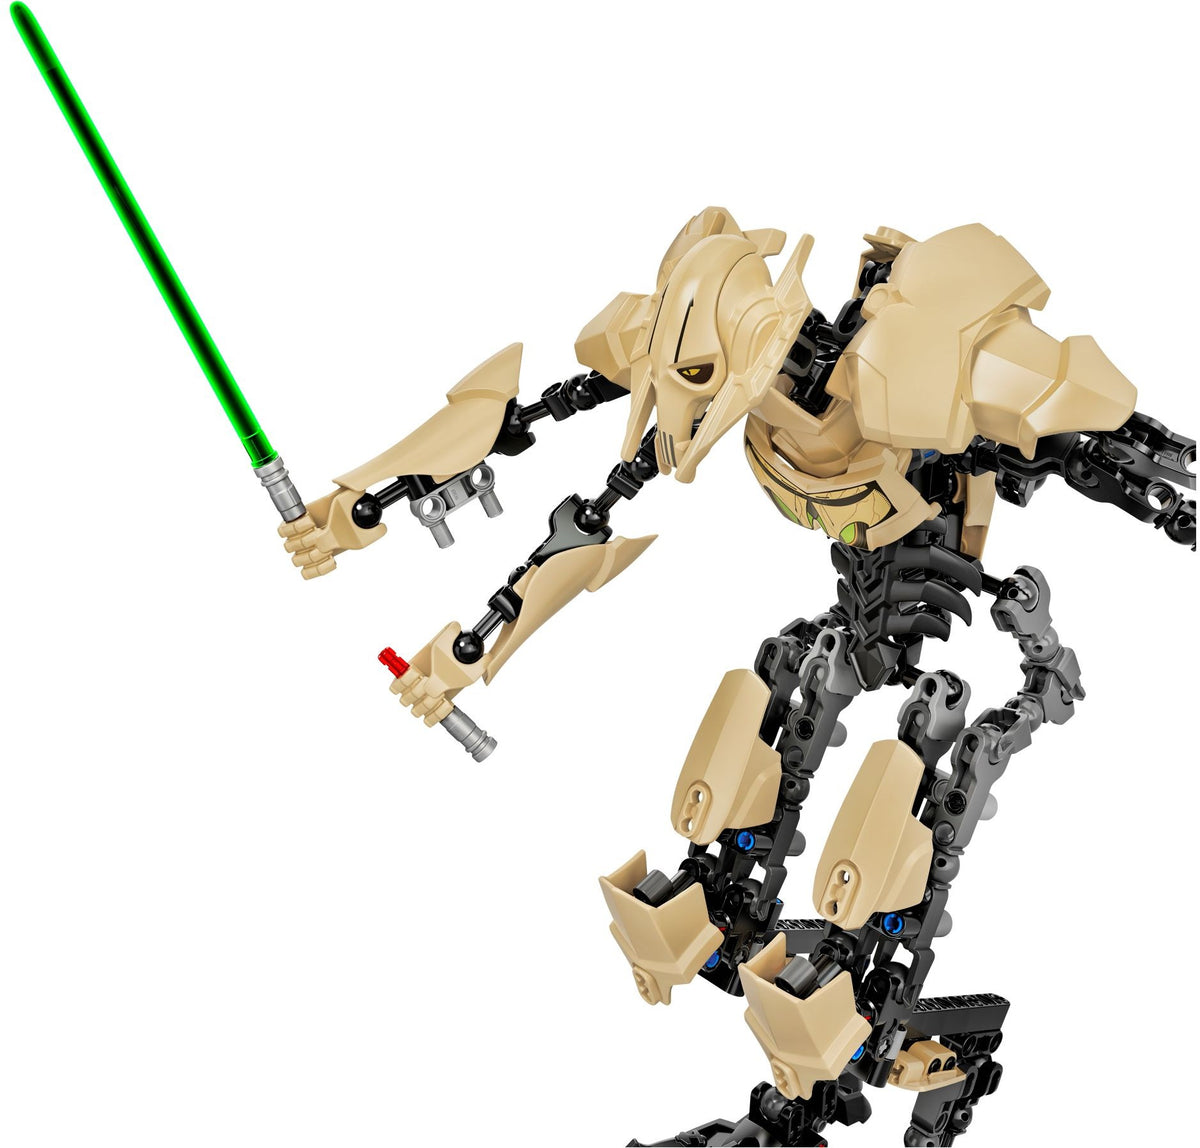 LEGO Star Wars Buildable Figures 75112 General Grievous